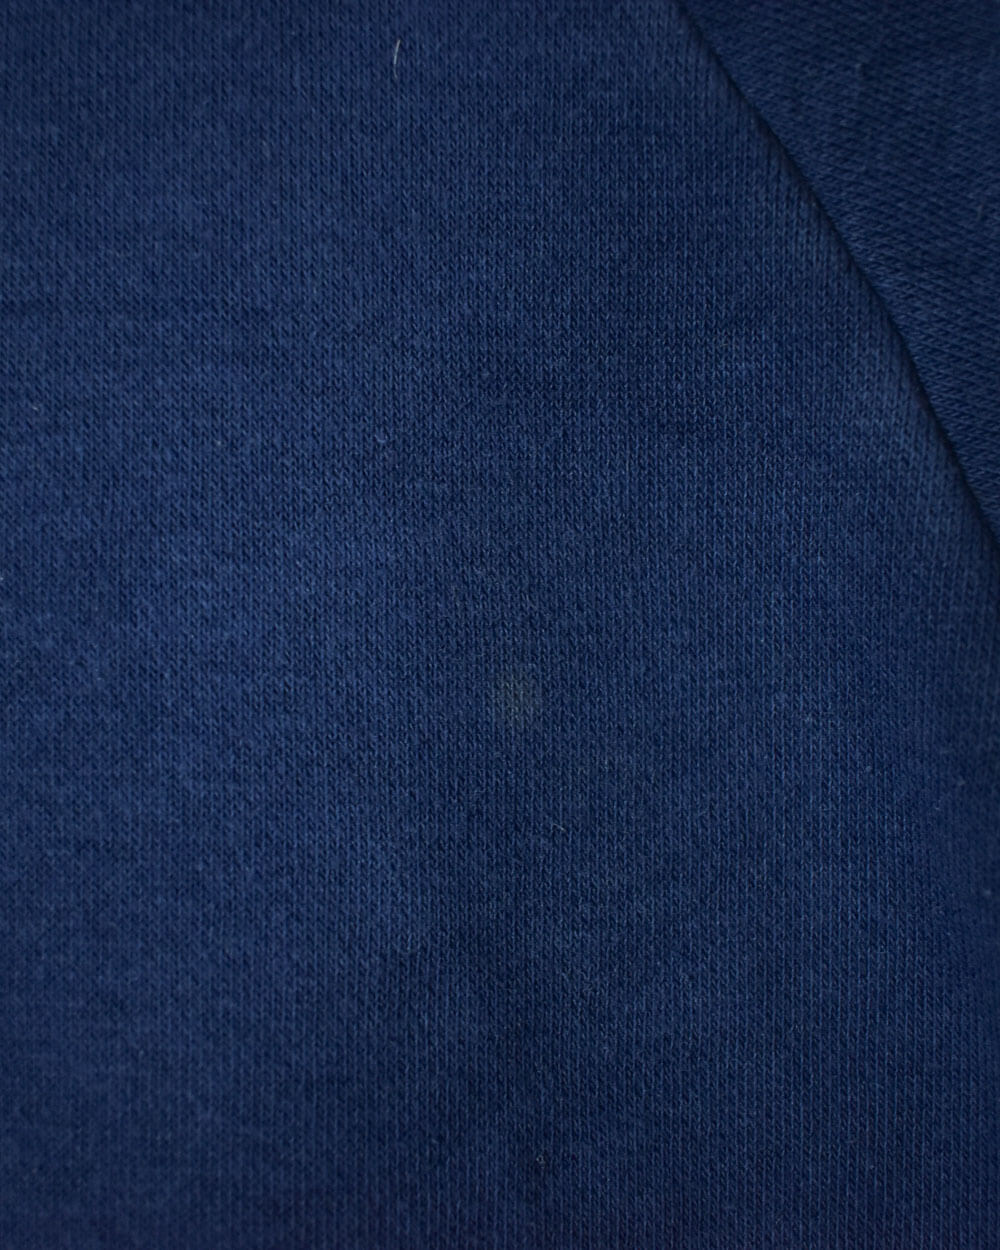 Blue Adidas FK Srbija Berlin Sweatshirt - Small